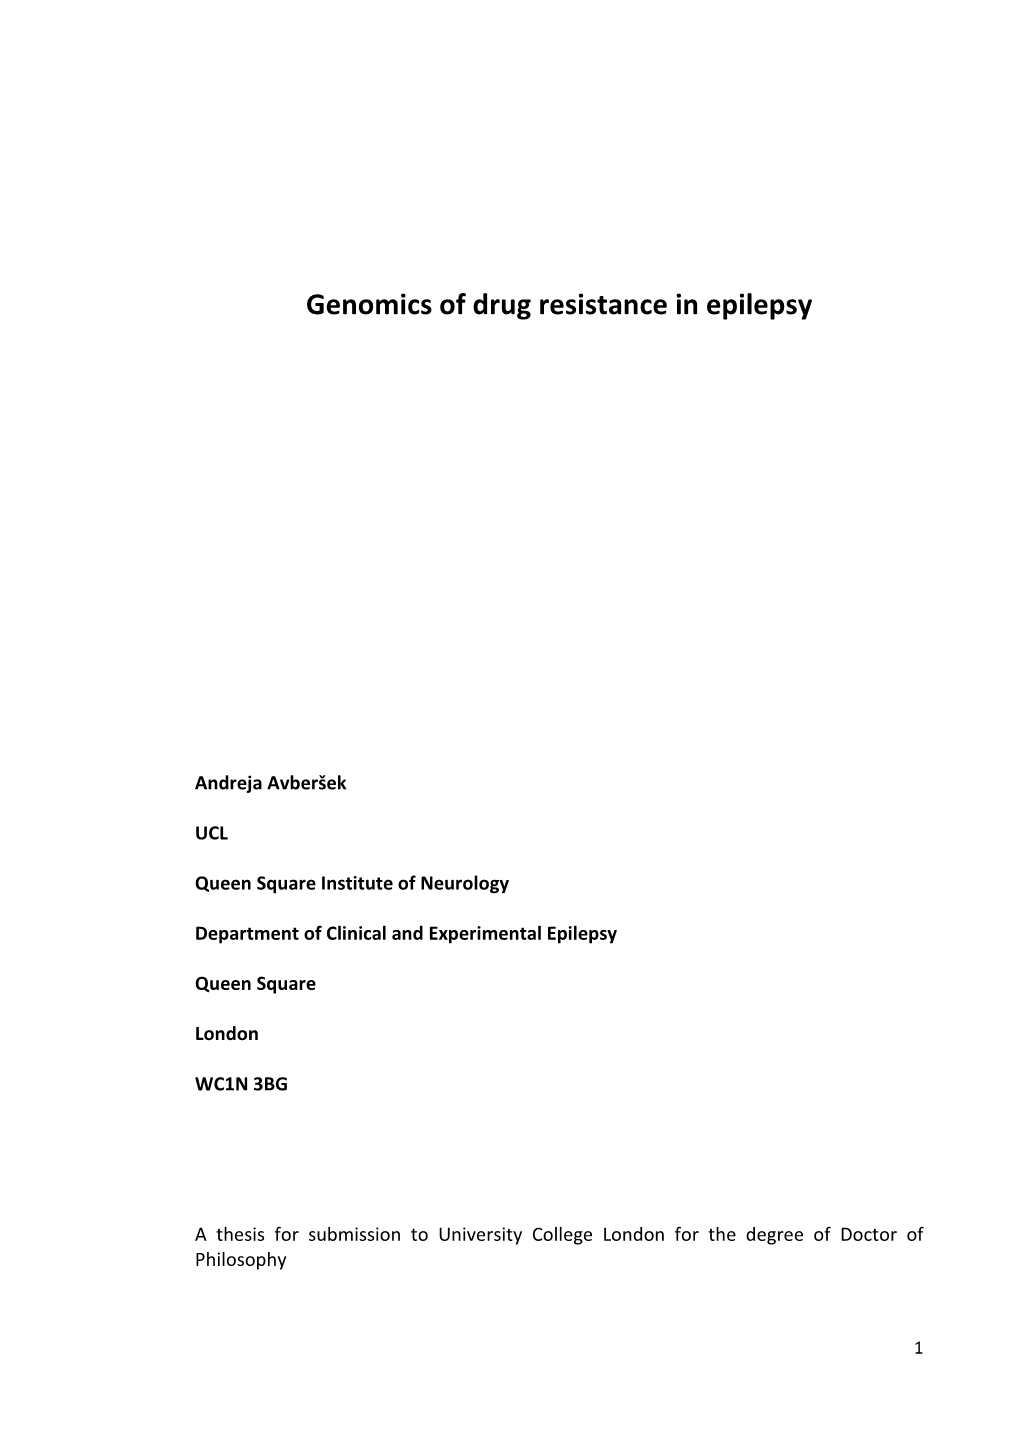 Genomics of Drug Resistance in Epilepsy